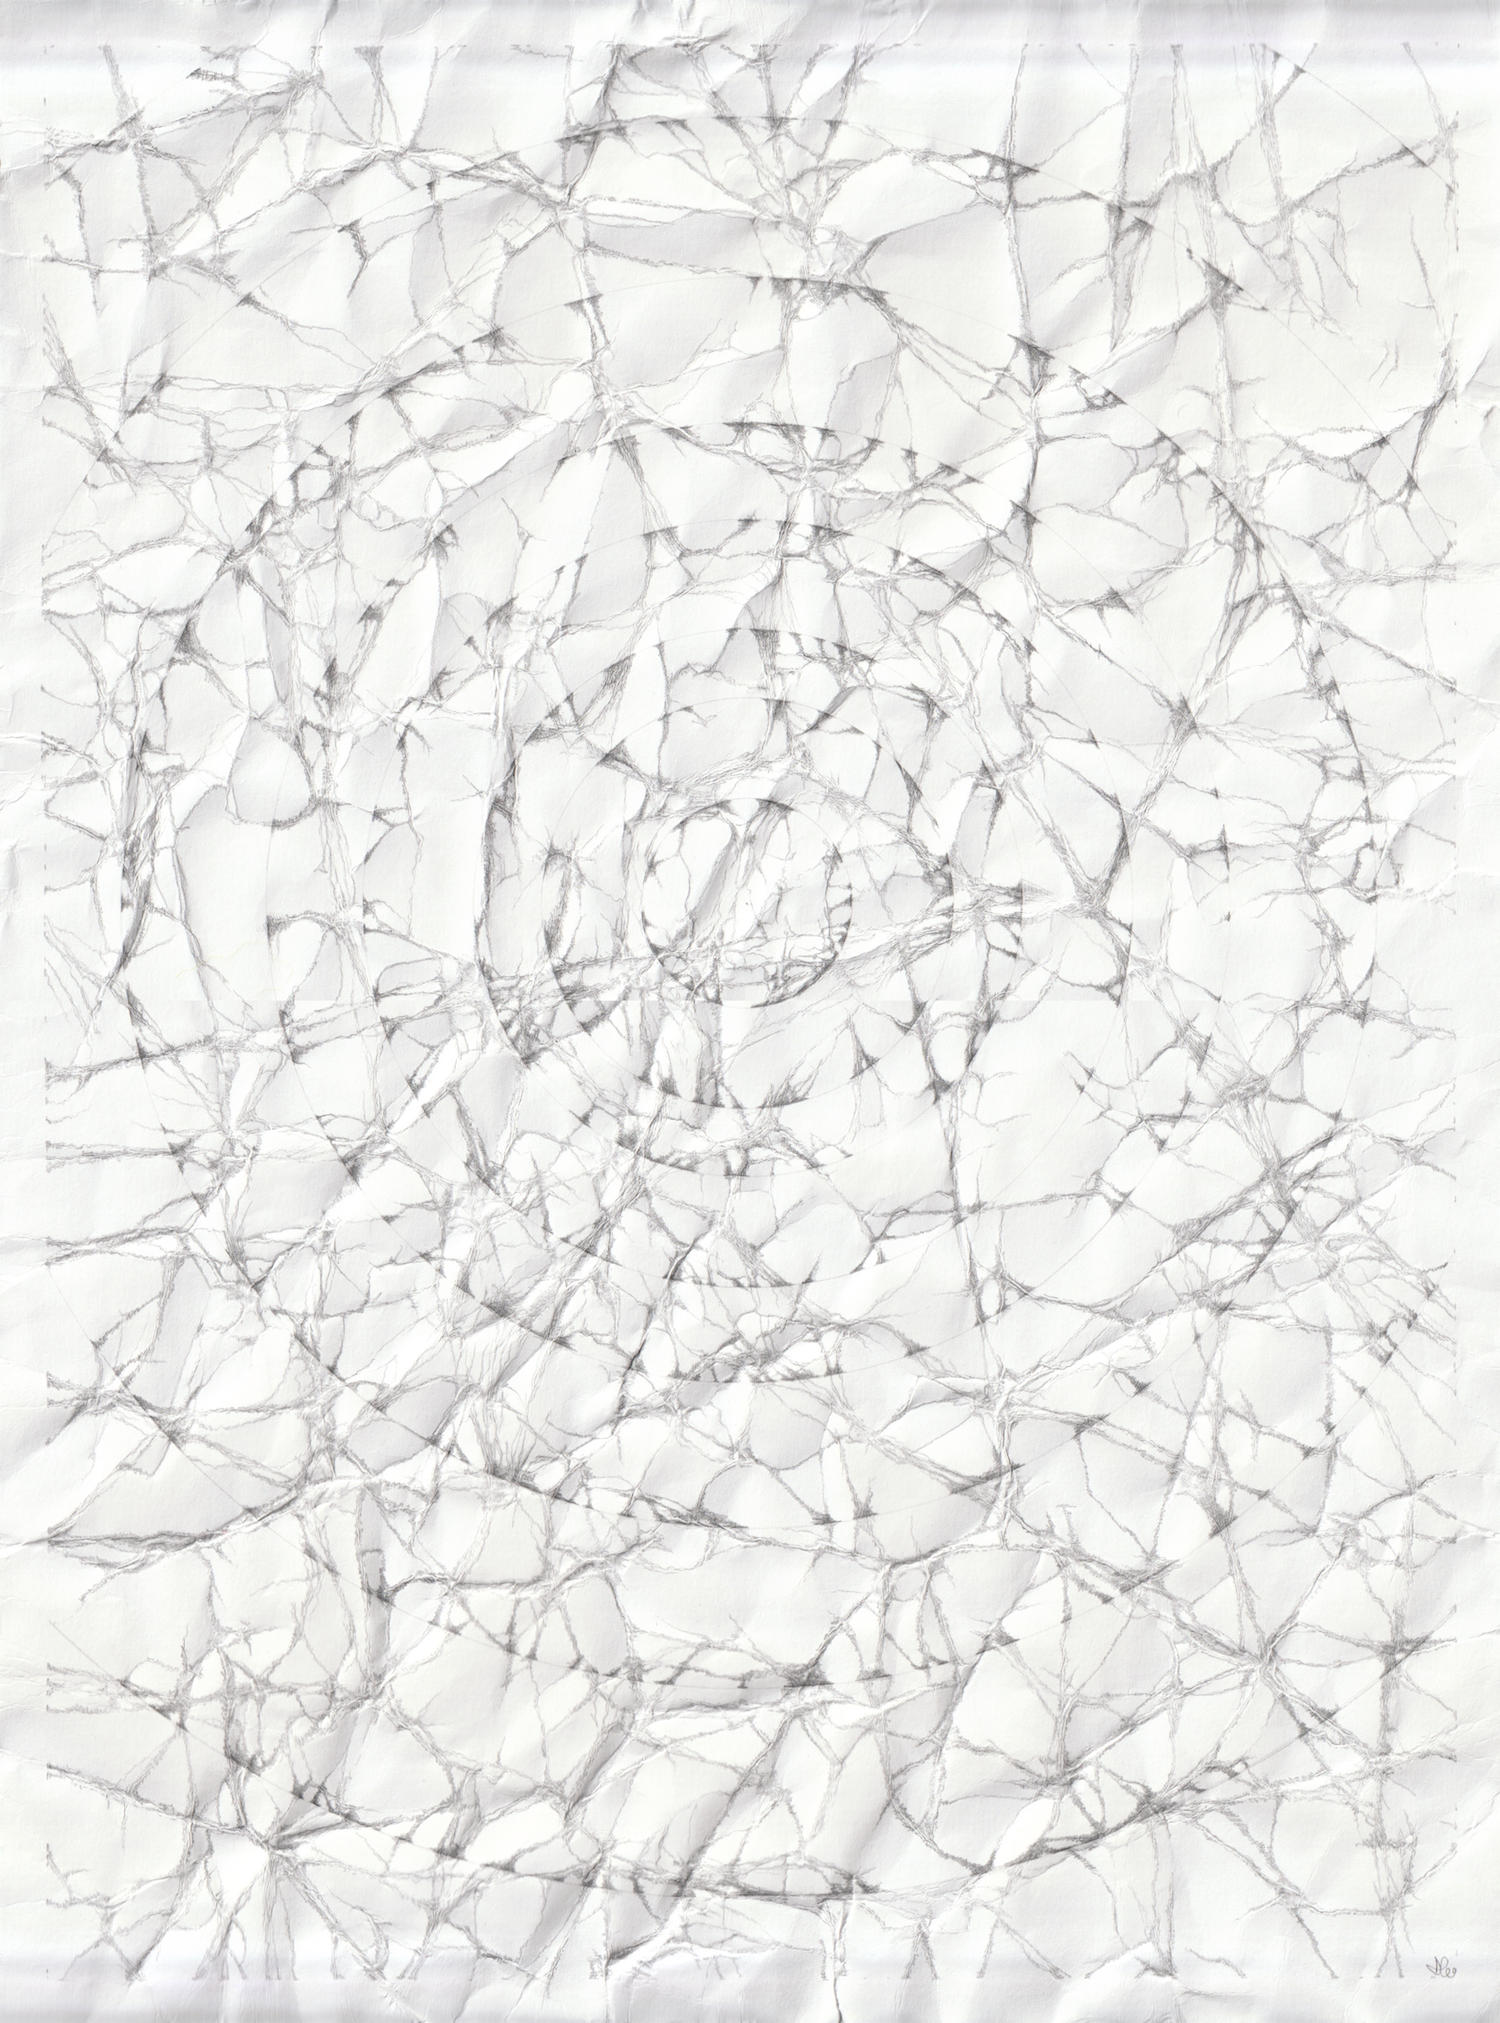 Circles (39 x 29 cm) pencil on paper